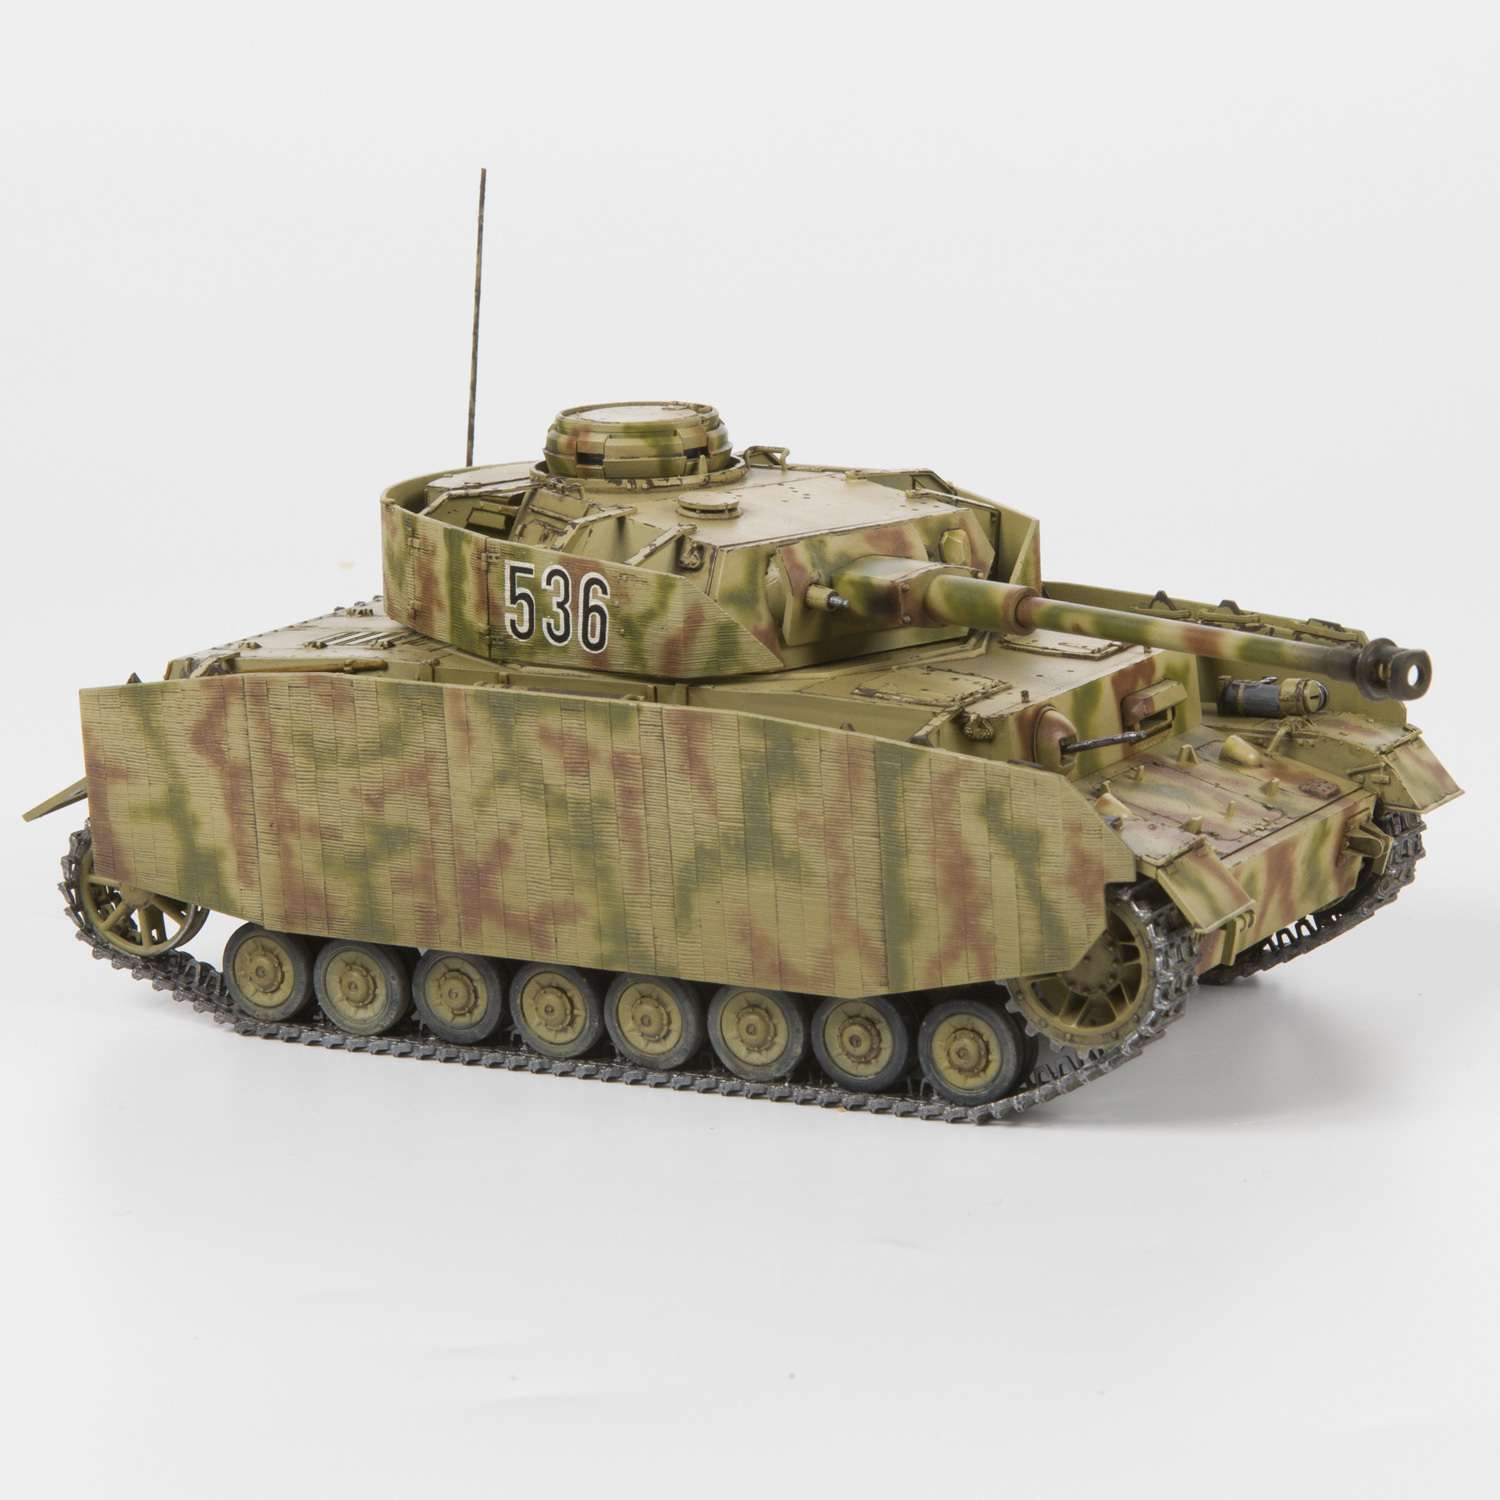 Немецкий средний танк. Звезда t-IV H", 3620. T-IV Ausf h 1/35. Сборная модель zvezda 3620 немецкий средний танк т-IV (Н). Модель танка звезда "немецкий средний танк t-IV H", 3620.